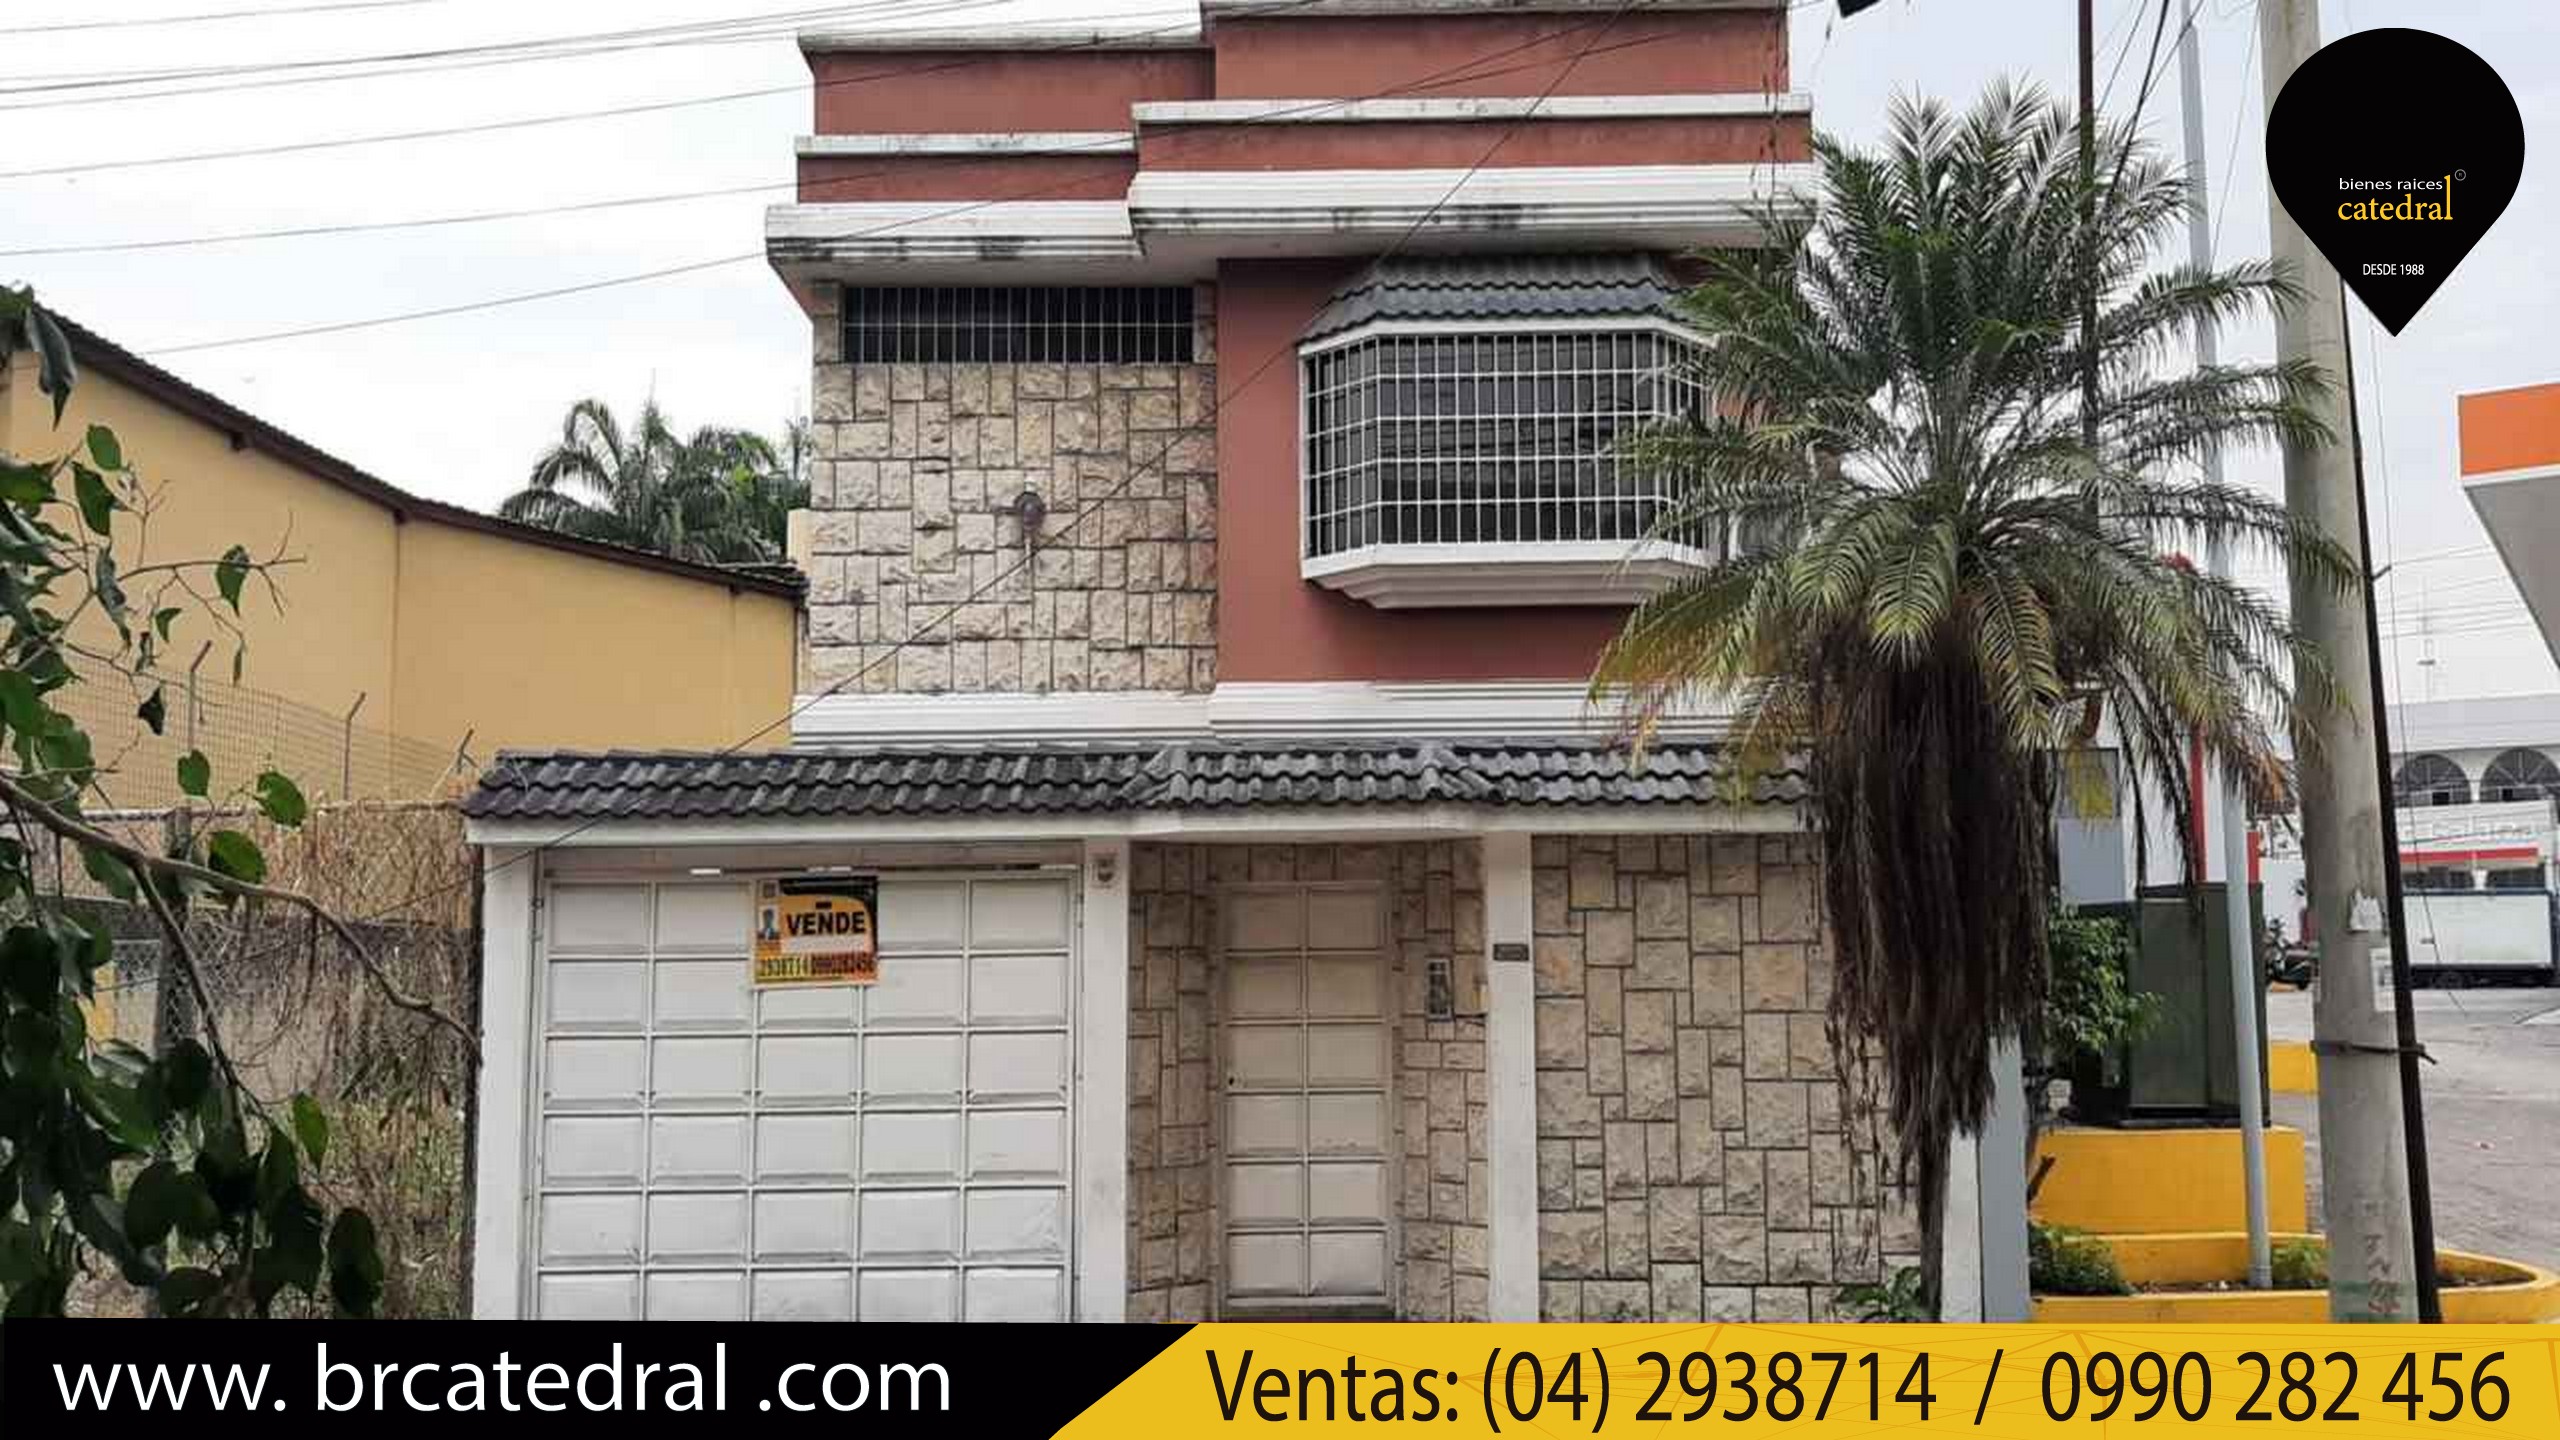 Villa Casa de Venta en Guayaquil Ecuador sector Urdenor - Av Juan Tanca Marengo